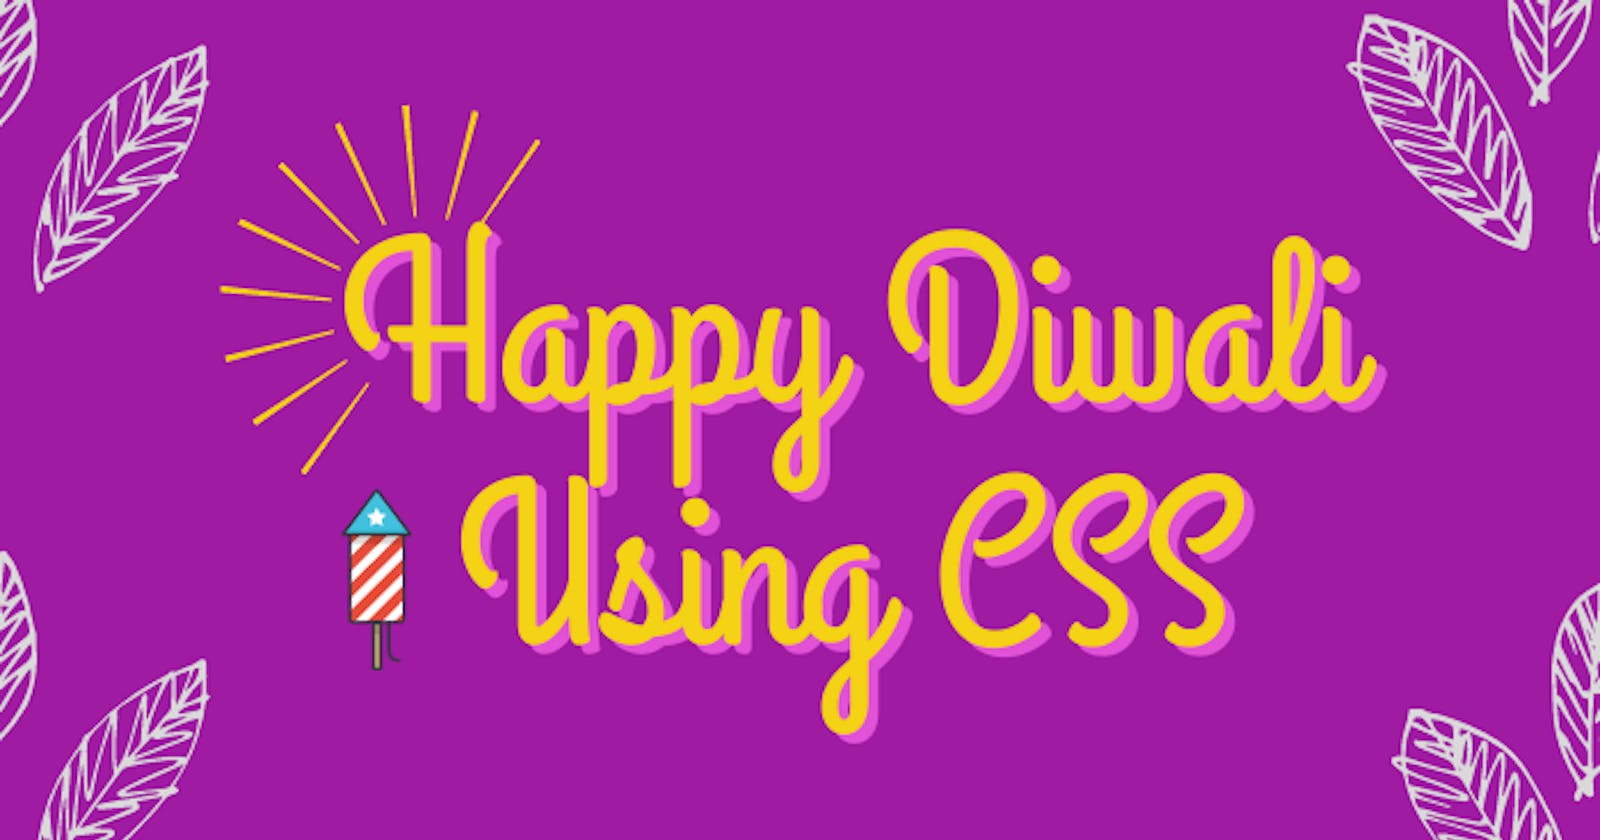 Wish Happy Diwali Using CSS Design